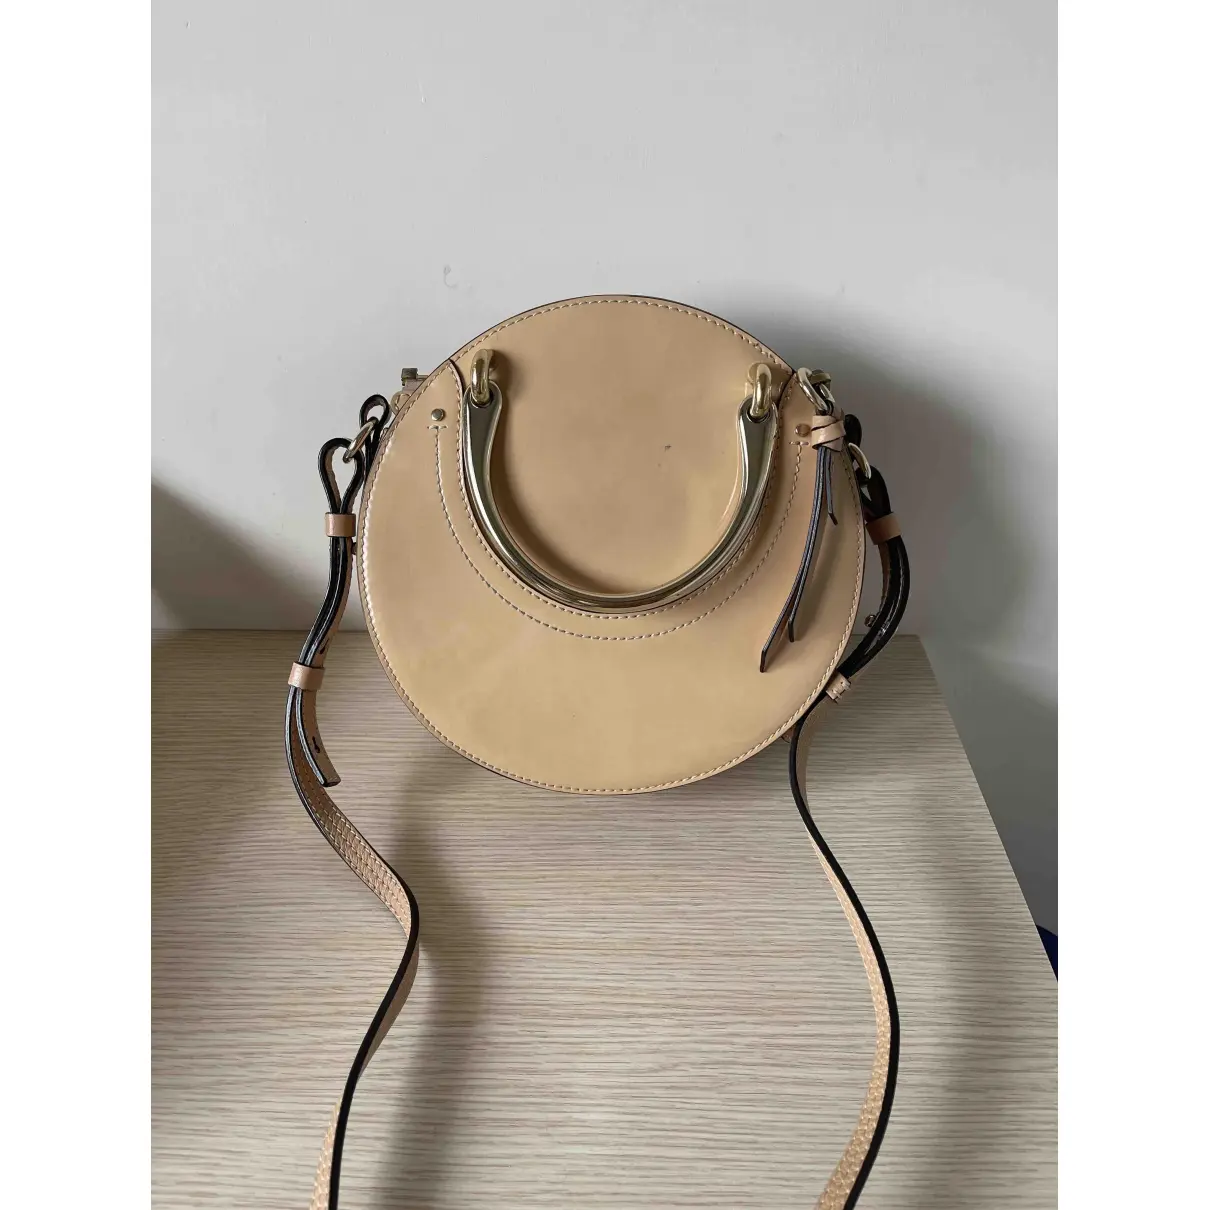 Buy Chloé Pixie patent leather bag online